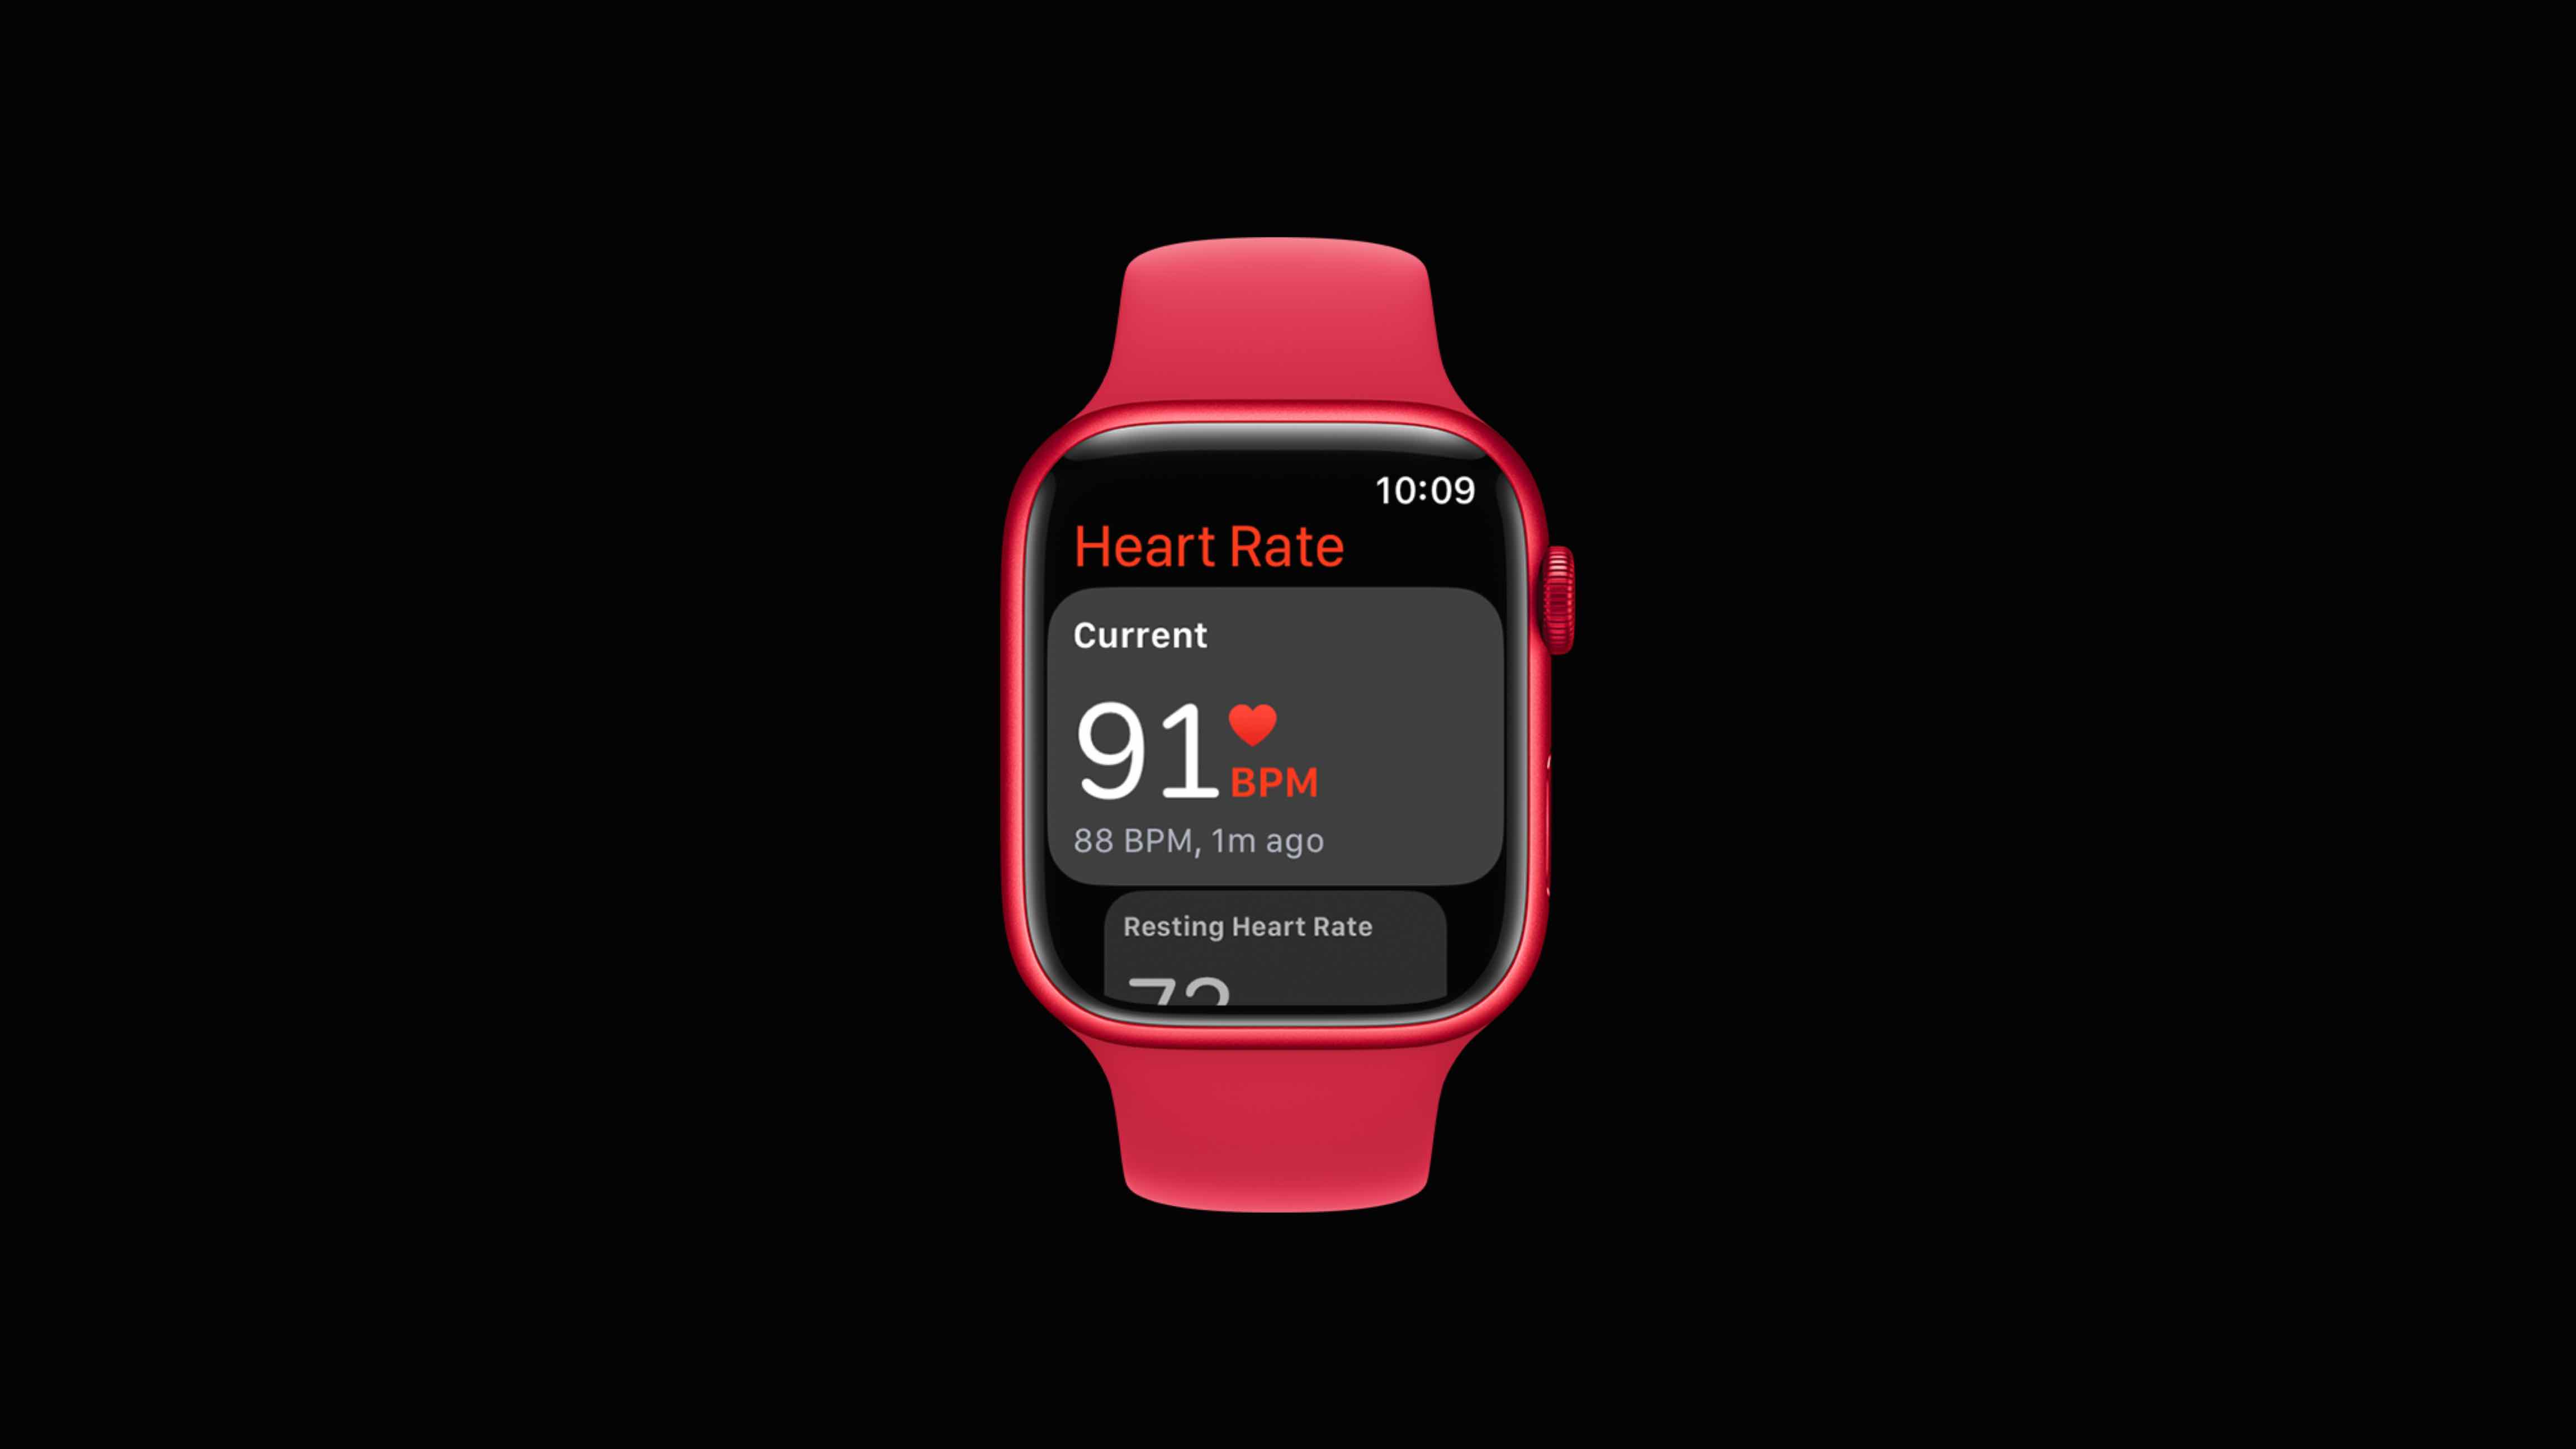 old Apple Watch Heart Rate app